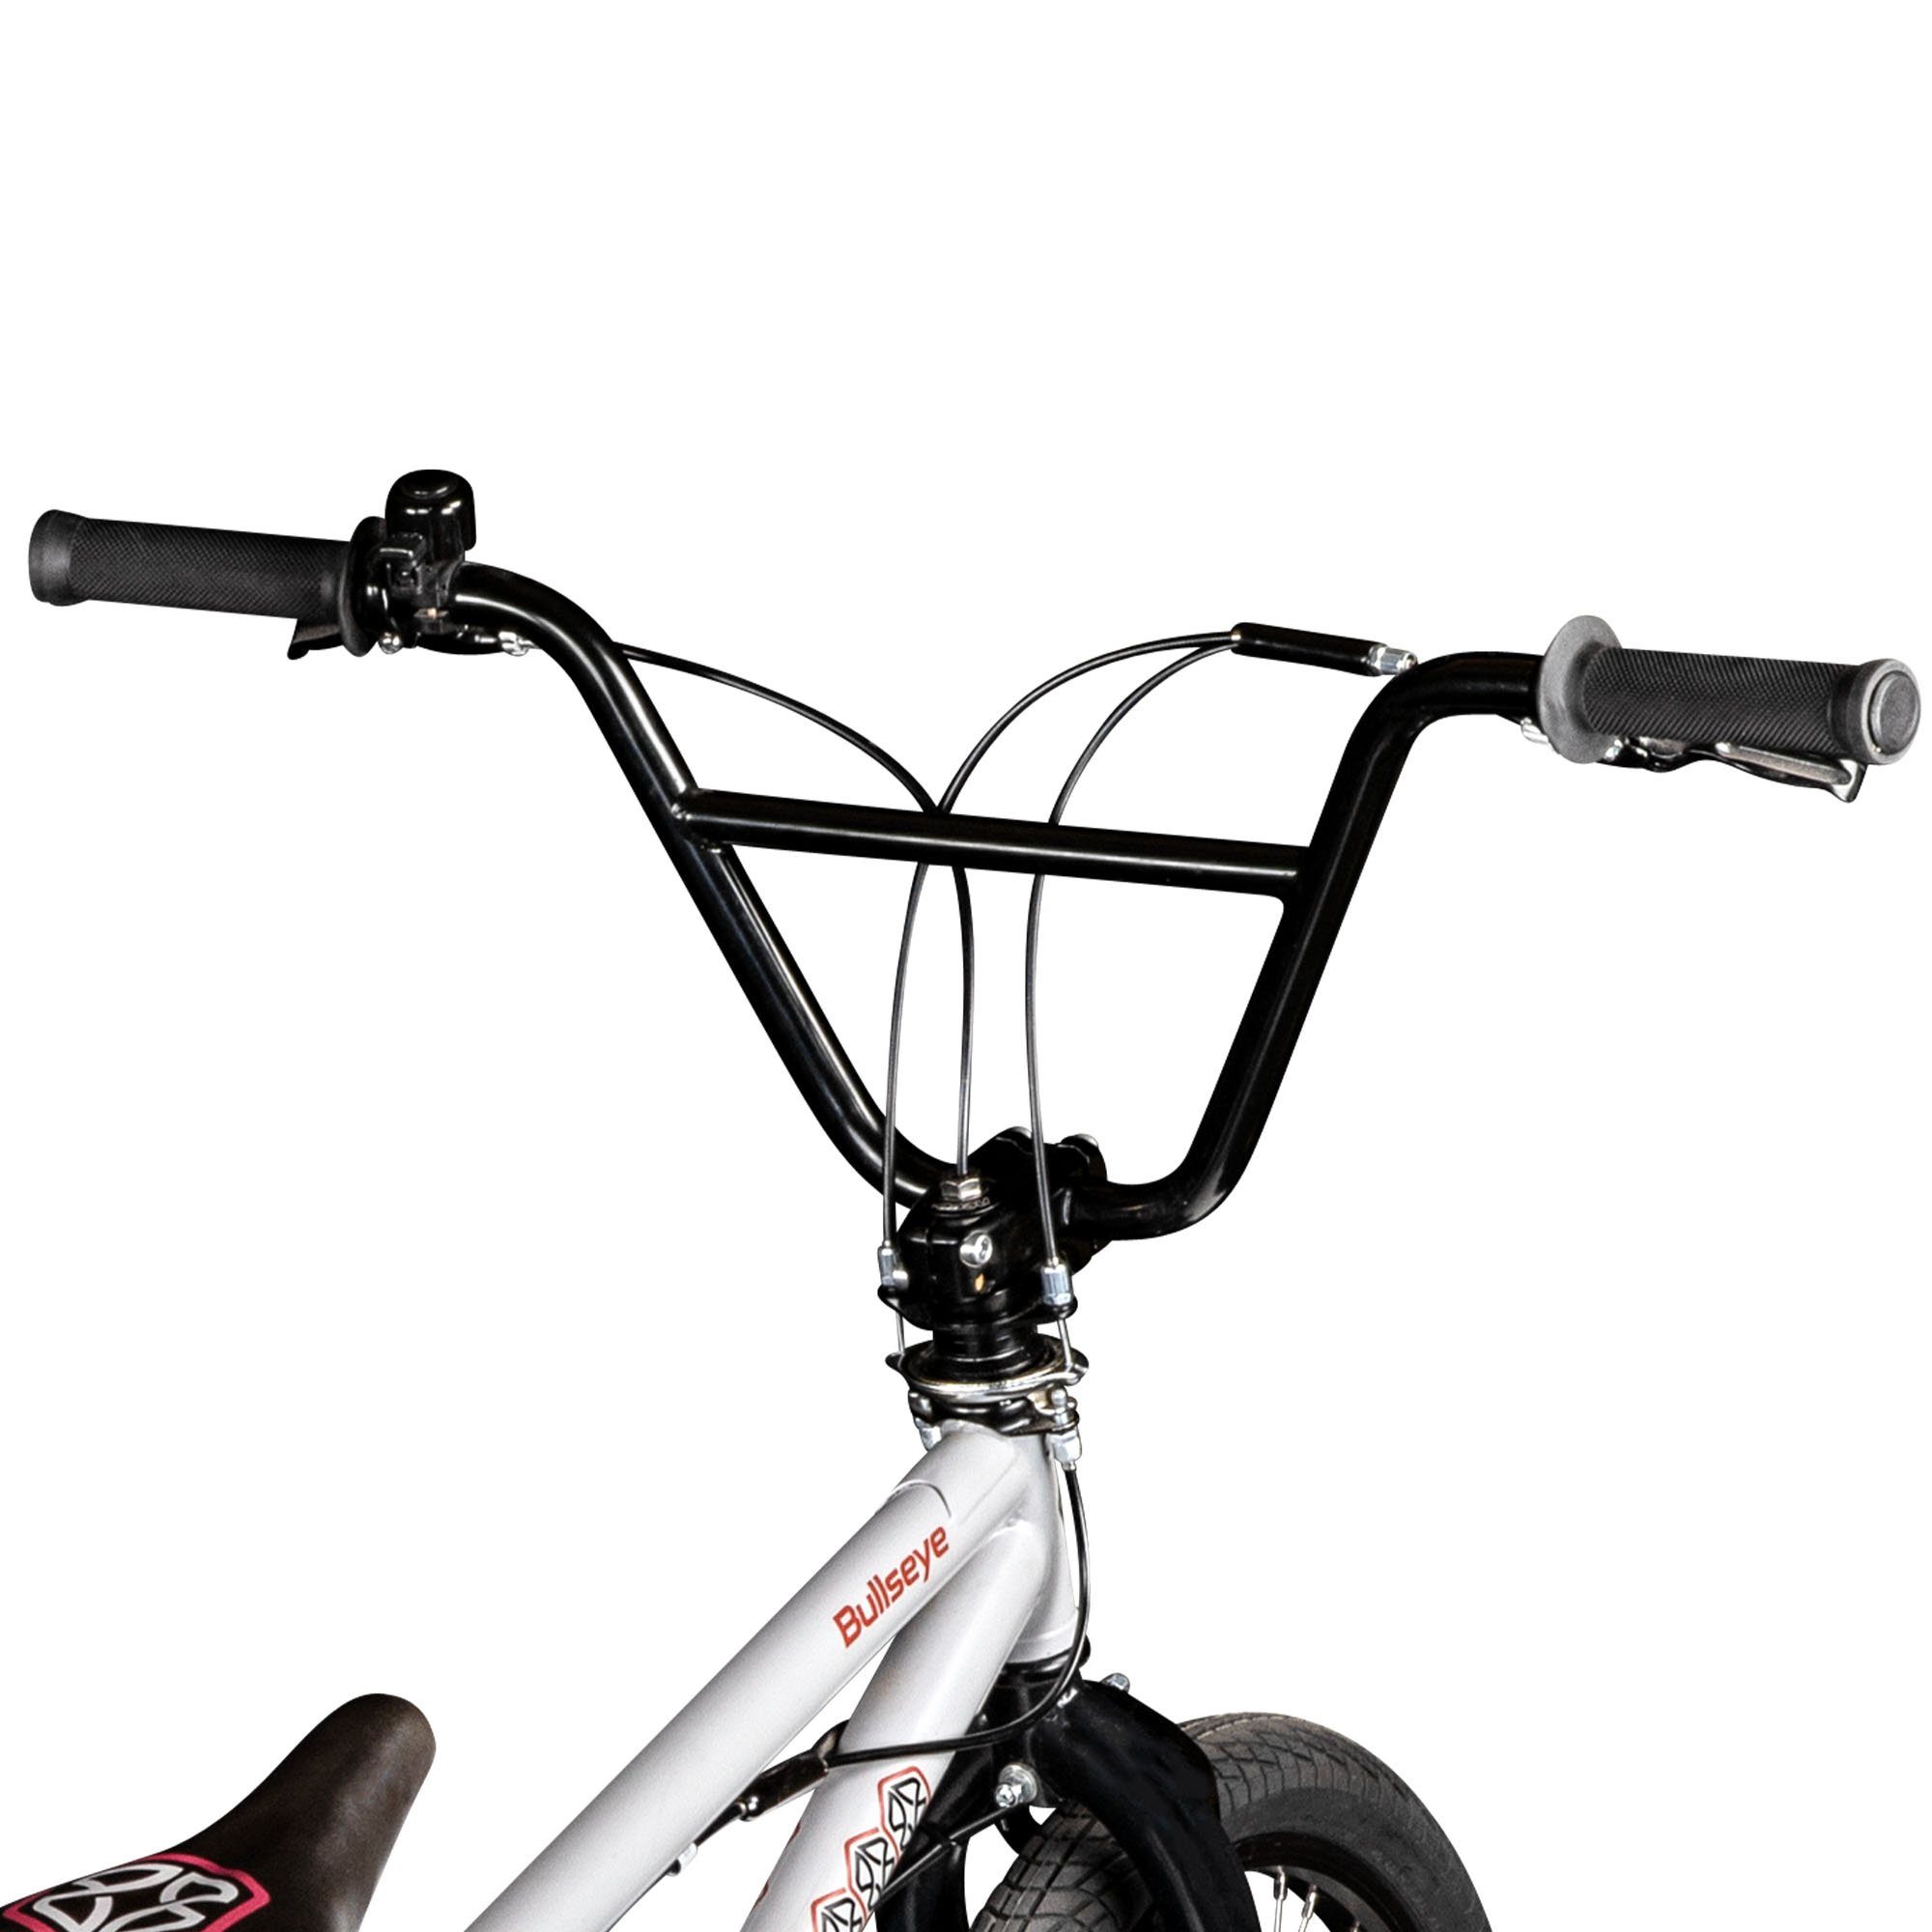 Jugendliche Zoll Gang, 301, Rotor Pegs Project 360° 20 2 Rad Fahrrad silber/rot Erwachsene BMX-Rad bullseye 1 BMX